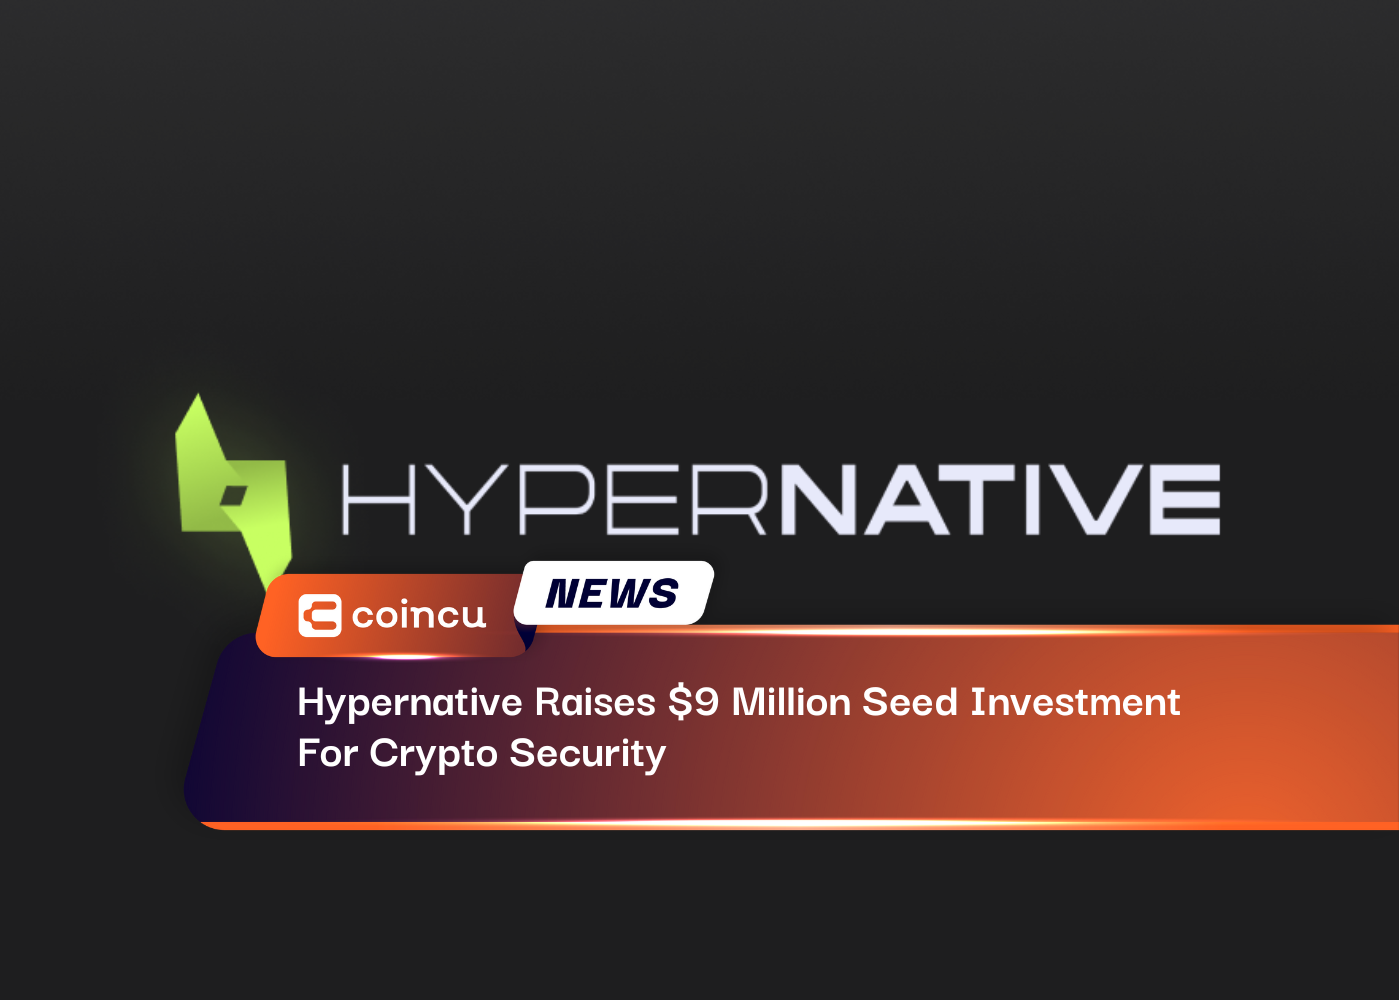 Hypernative Raises 9 Million Seed Investment